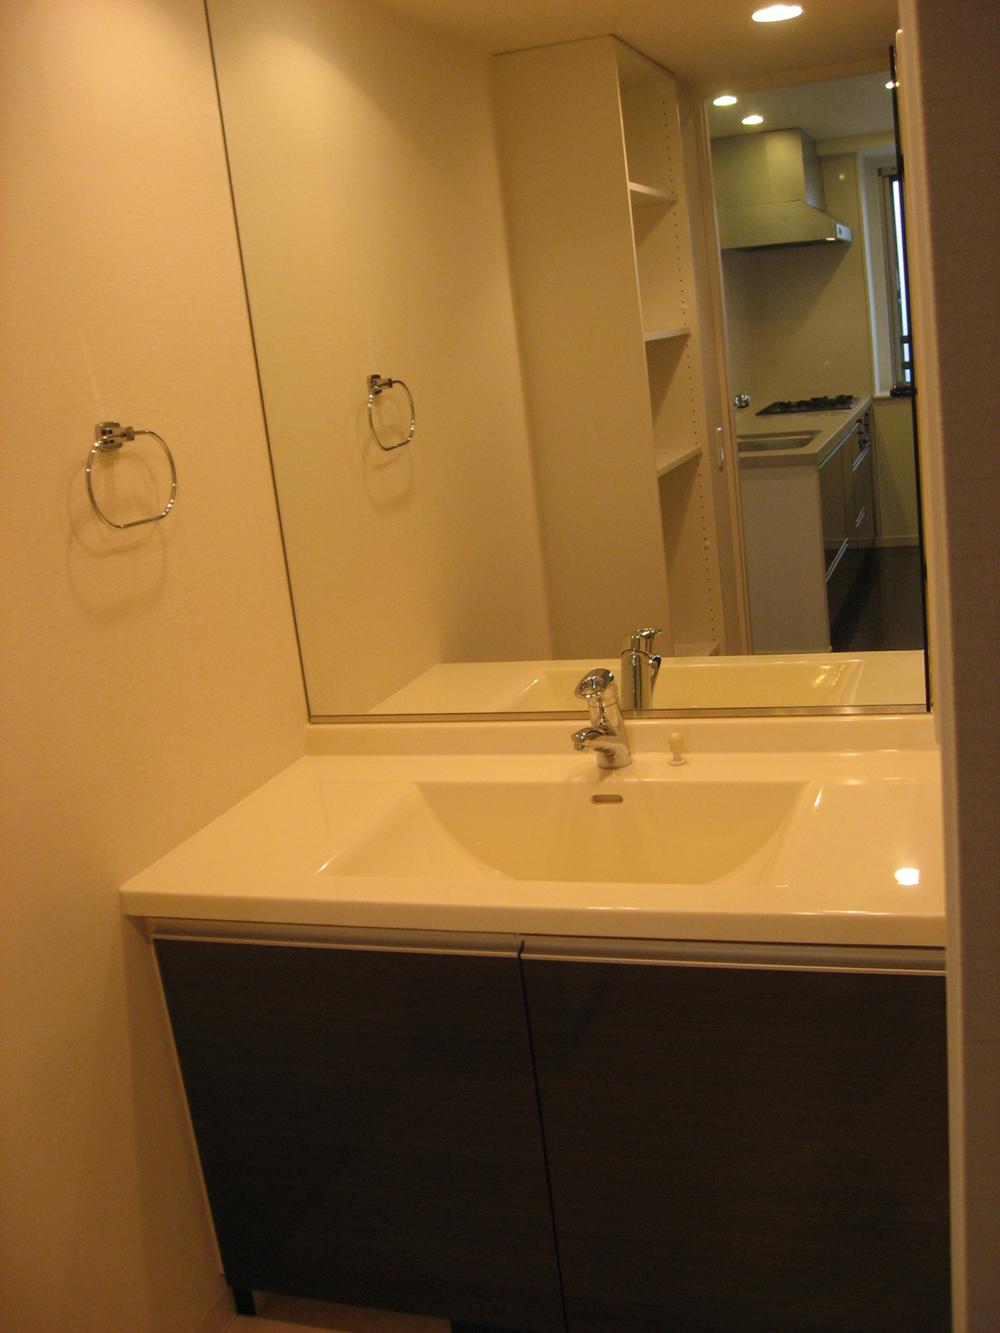 Wash basin, toilet. Wash basin of a large mirror.